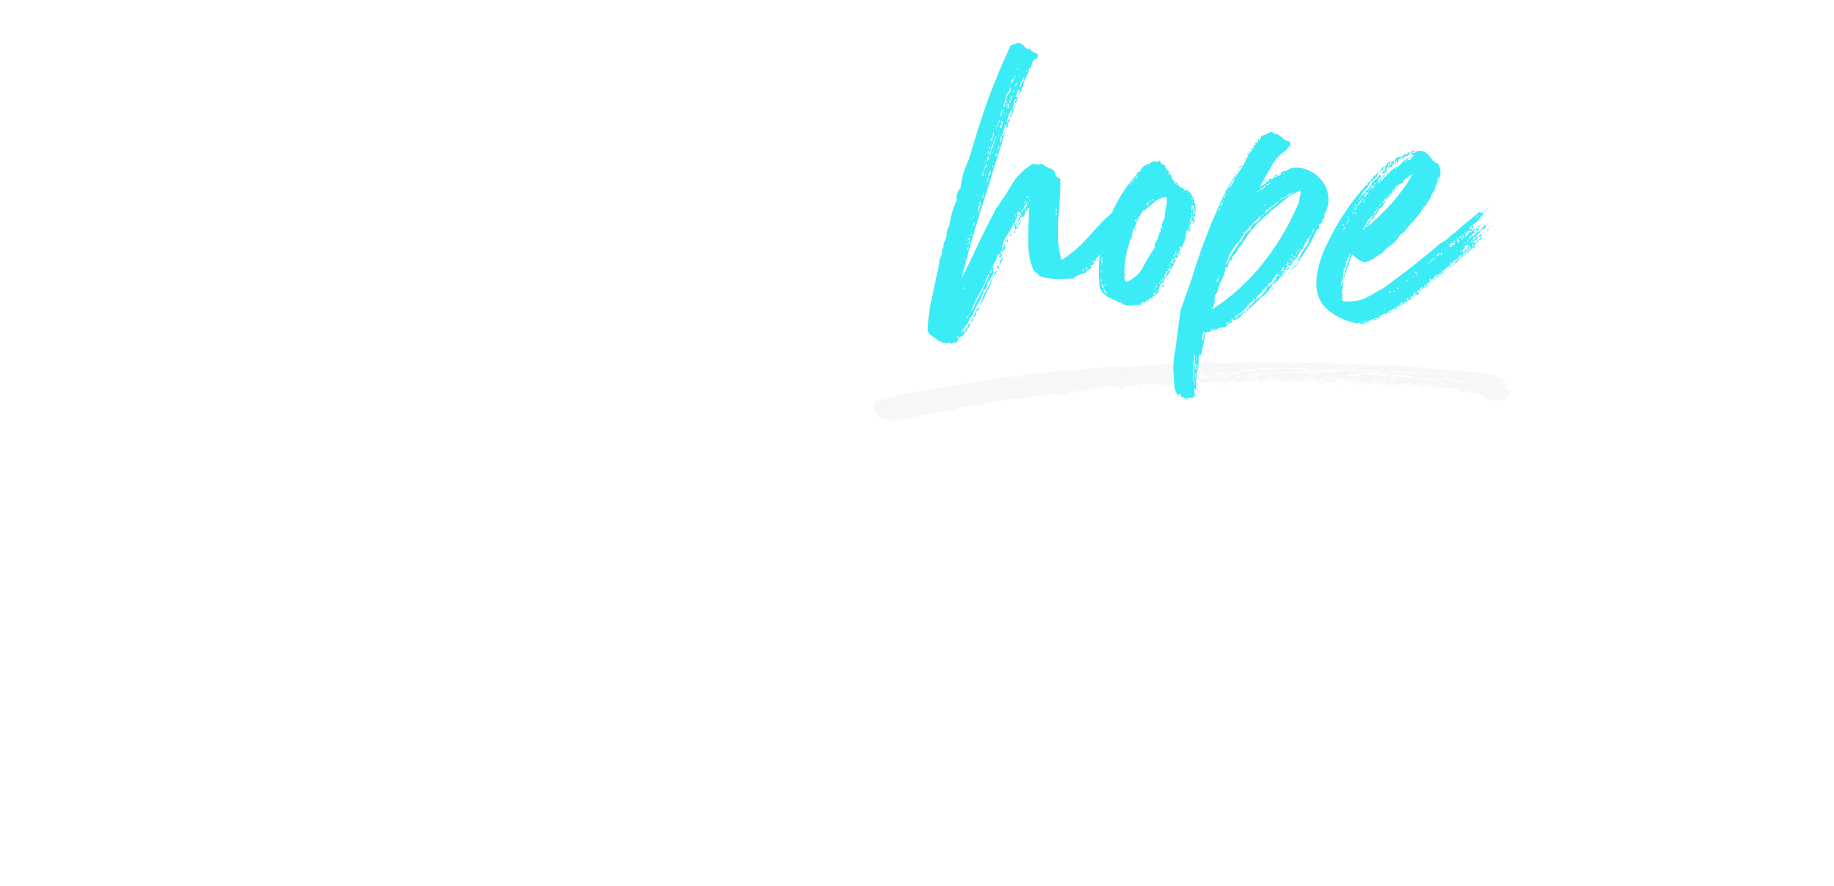 Bring hope as a Ramsey financial coach.